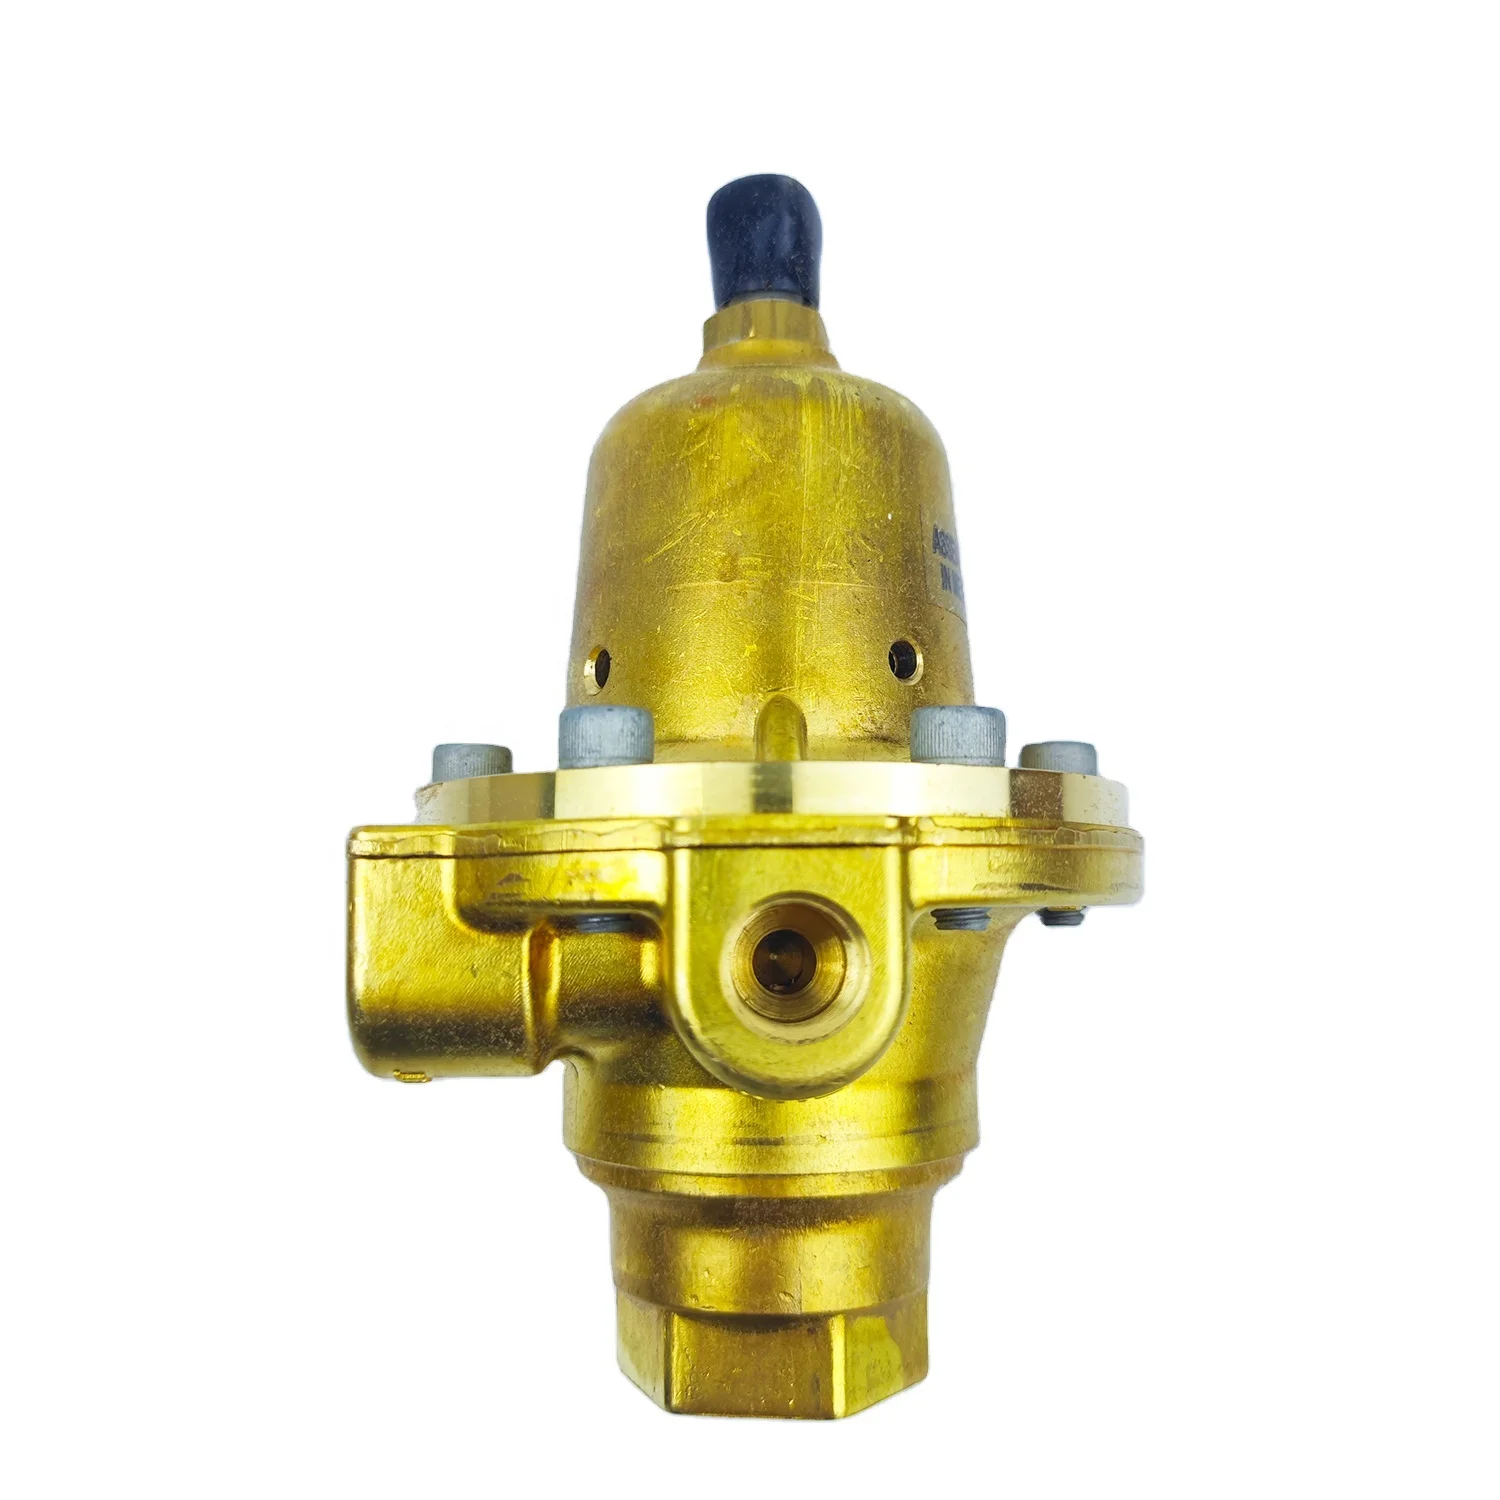 

Original brand Fisher 1301 series High Precision filter pressure reducing regulator valve Emerson Fisher 1301F-3